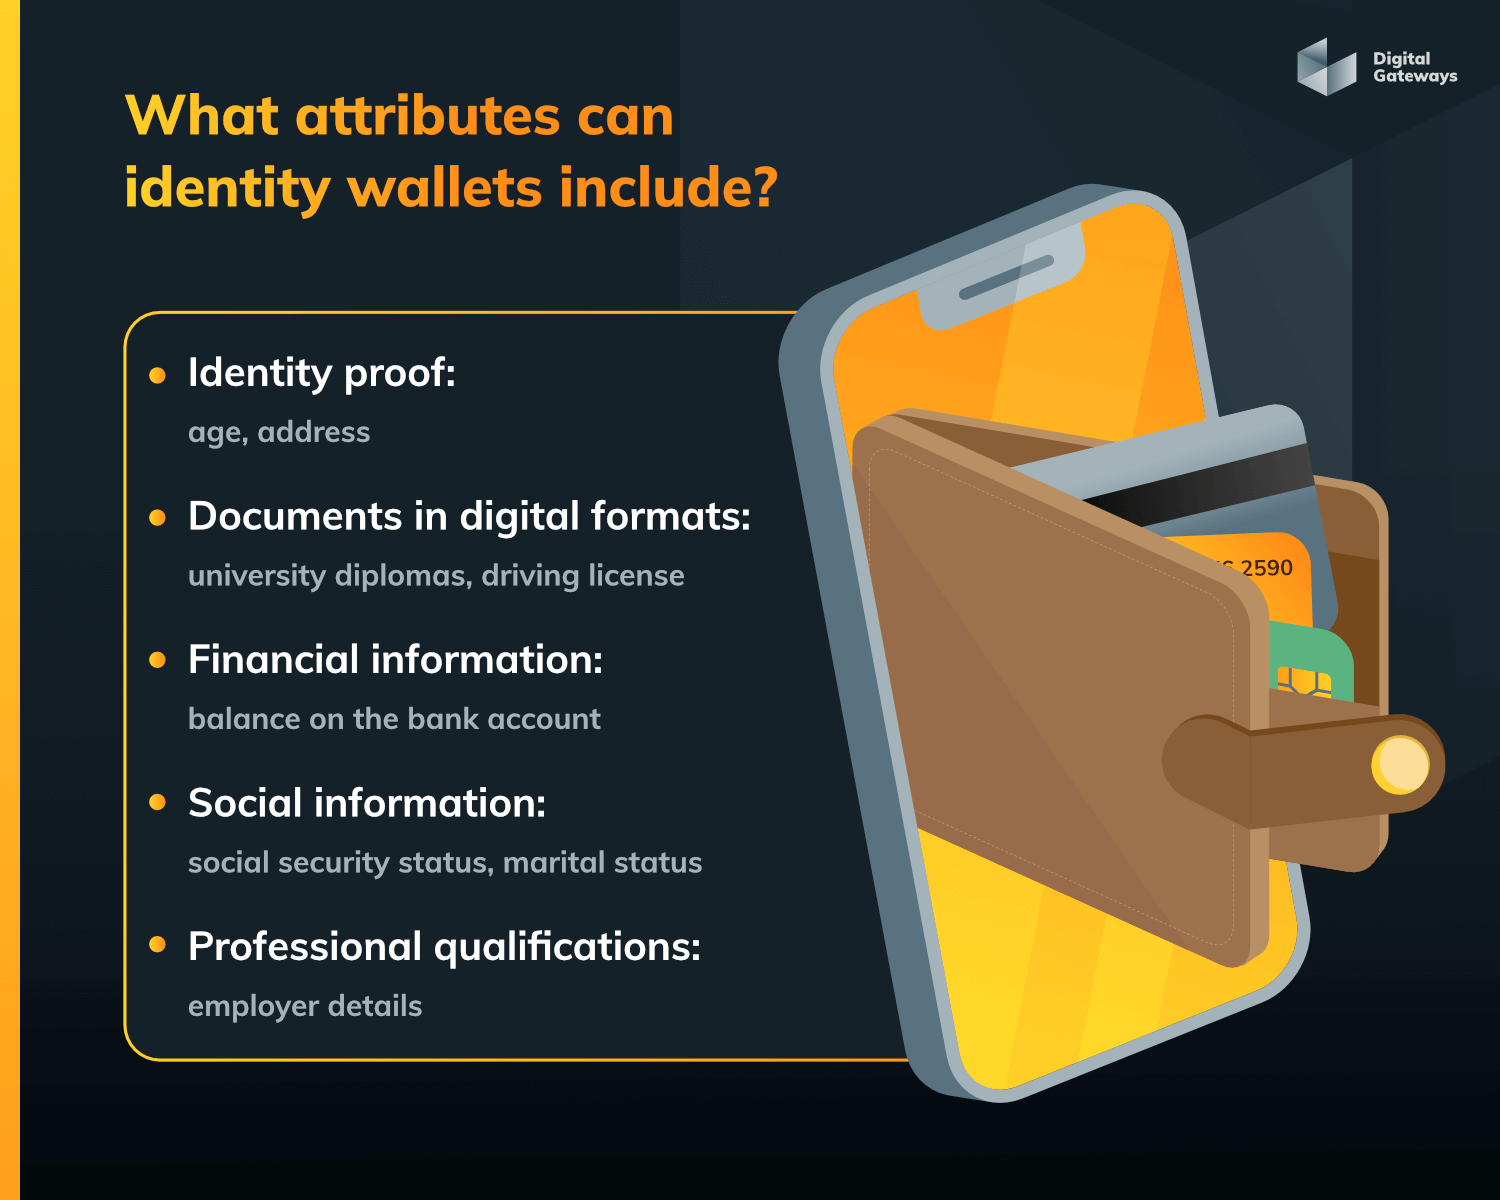 Atributes of identity wallets